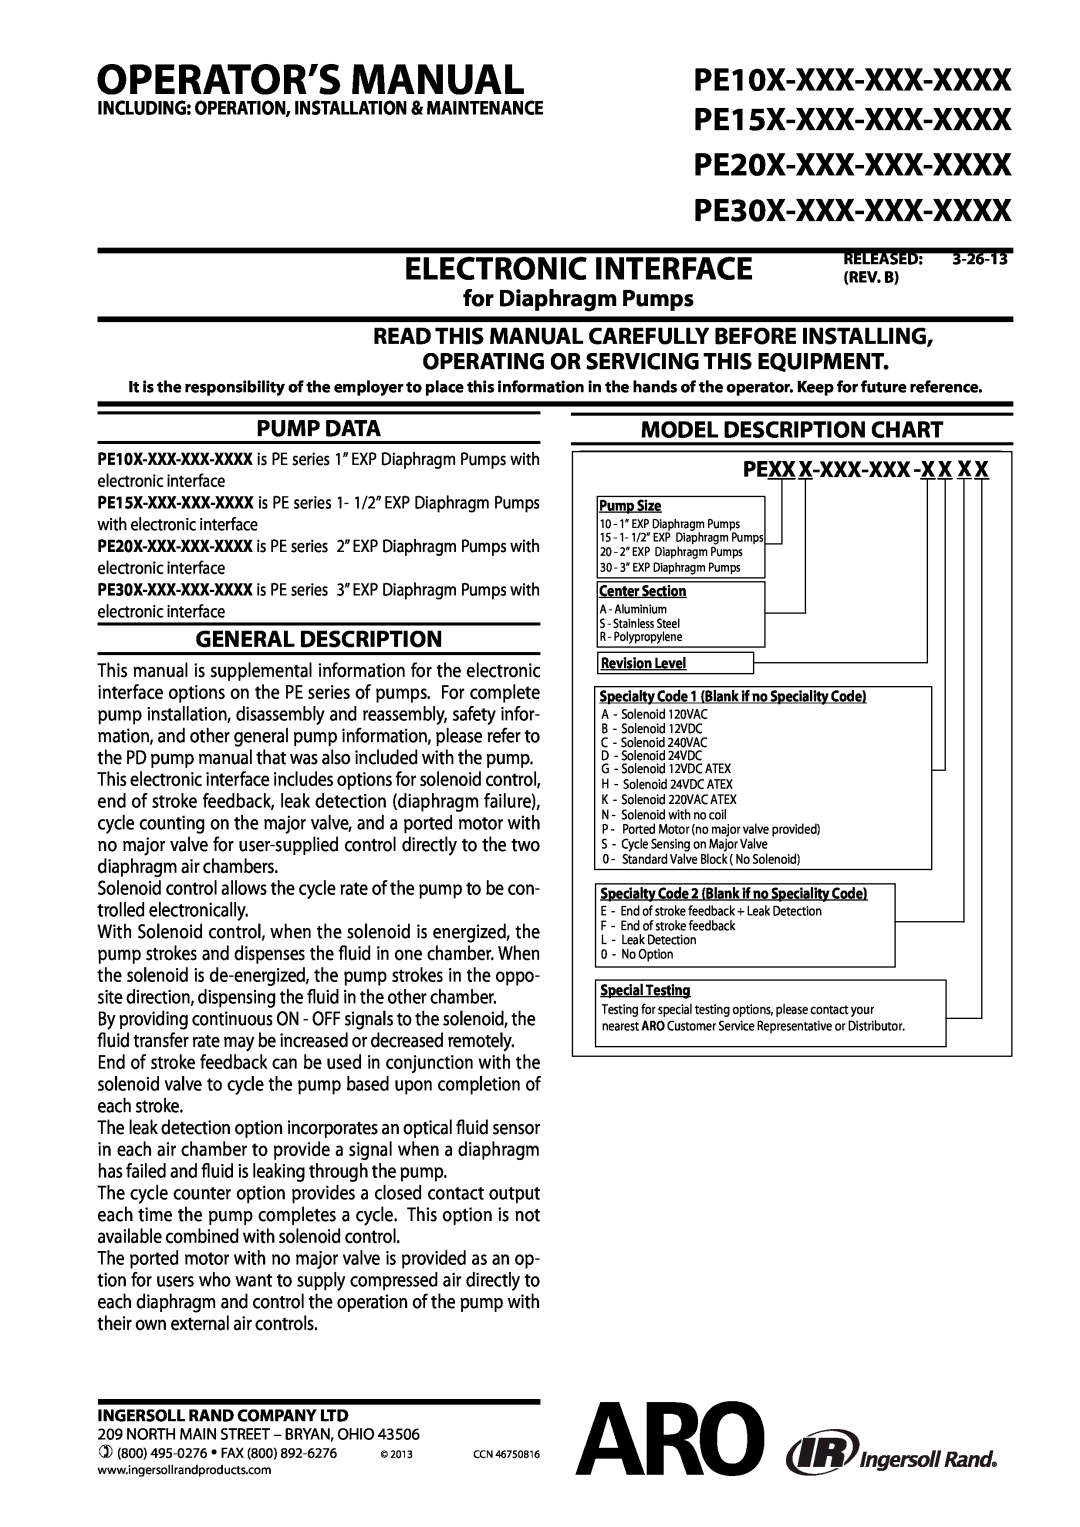 Ingersoll-Rand PE10X-XXX-XXX-XXXX manual for Diaphragm Pumps, Read This Manual Carefully Before Installing, Pump Data 